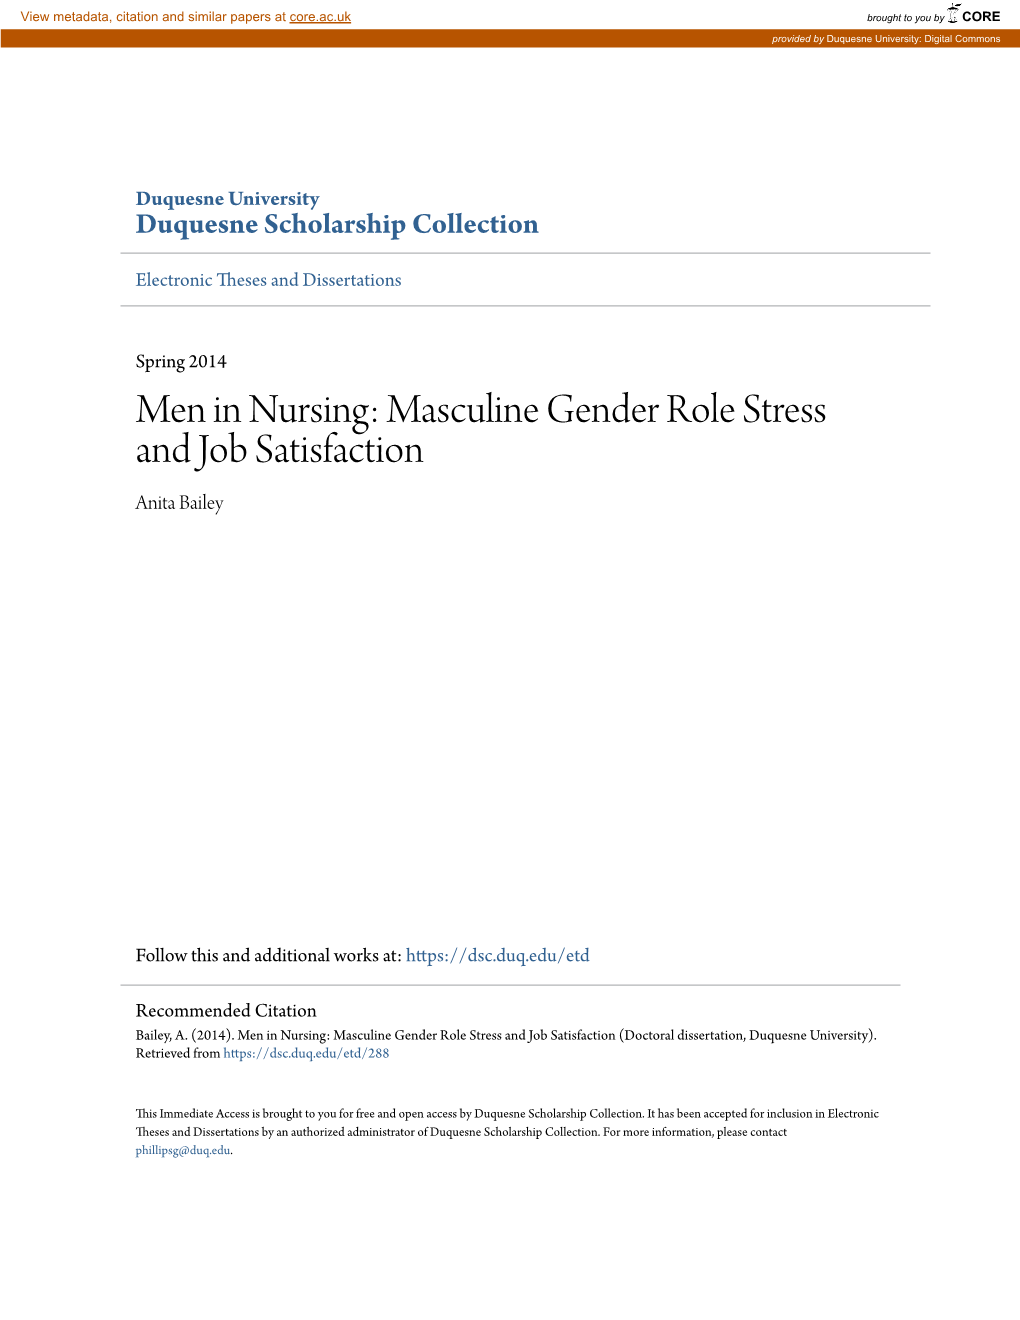 Men in Nursing: Masculine Gender Role Stress and Job Satisfaction Anita Bailey